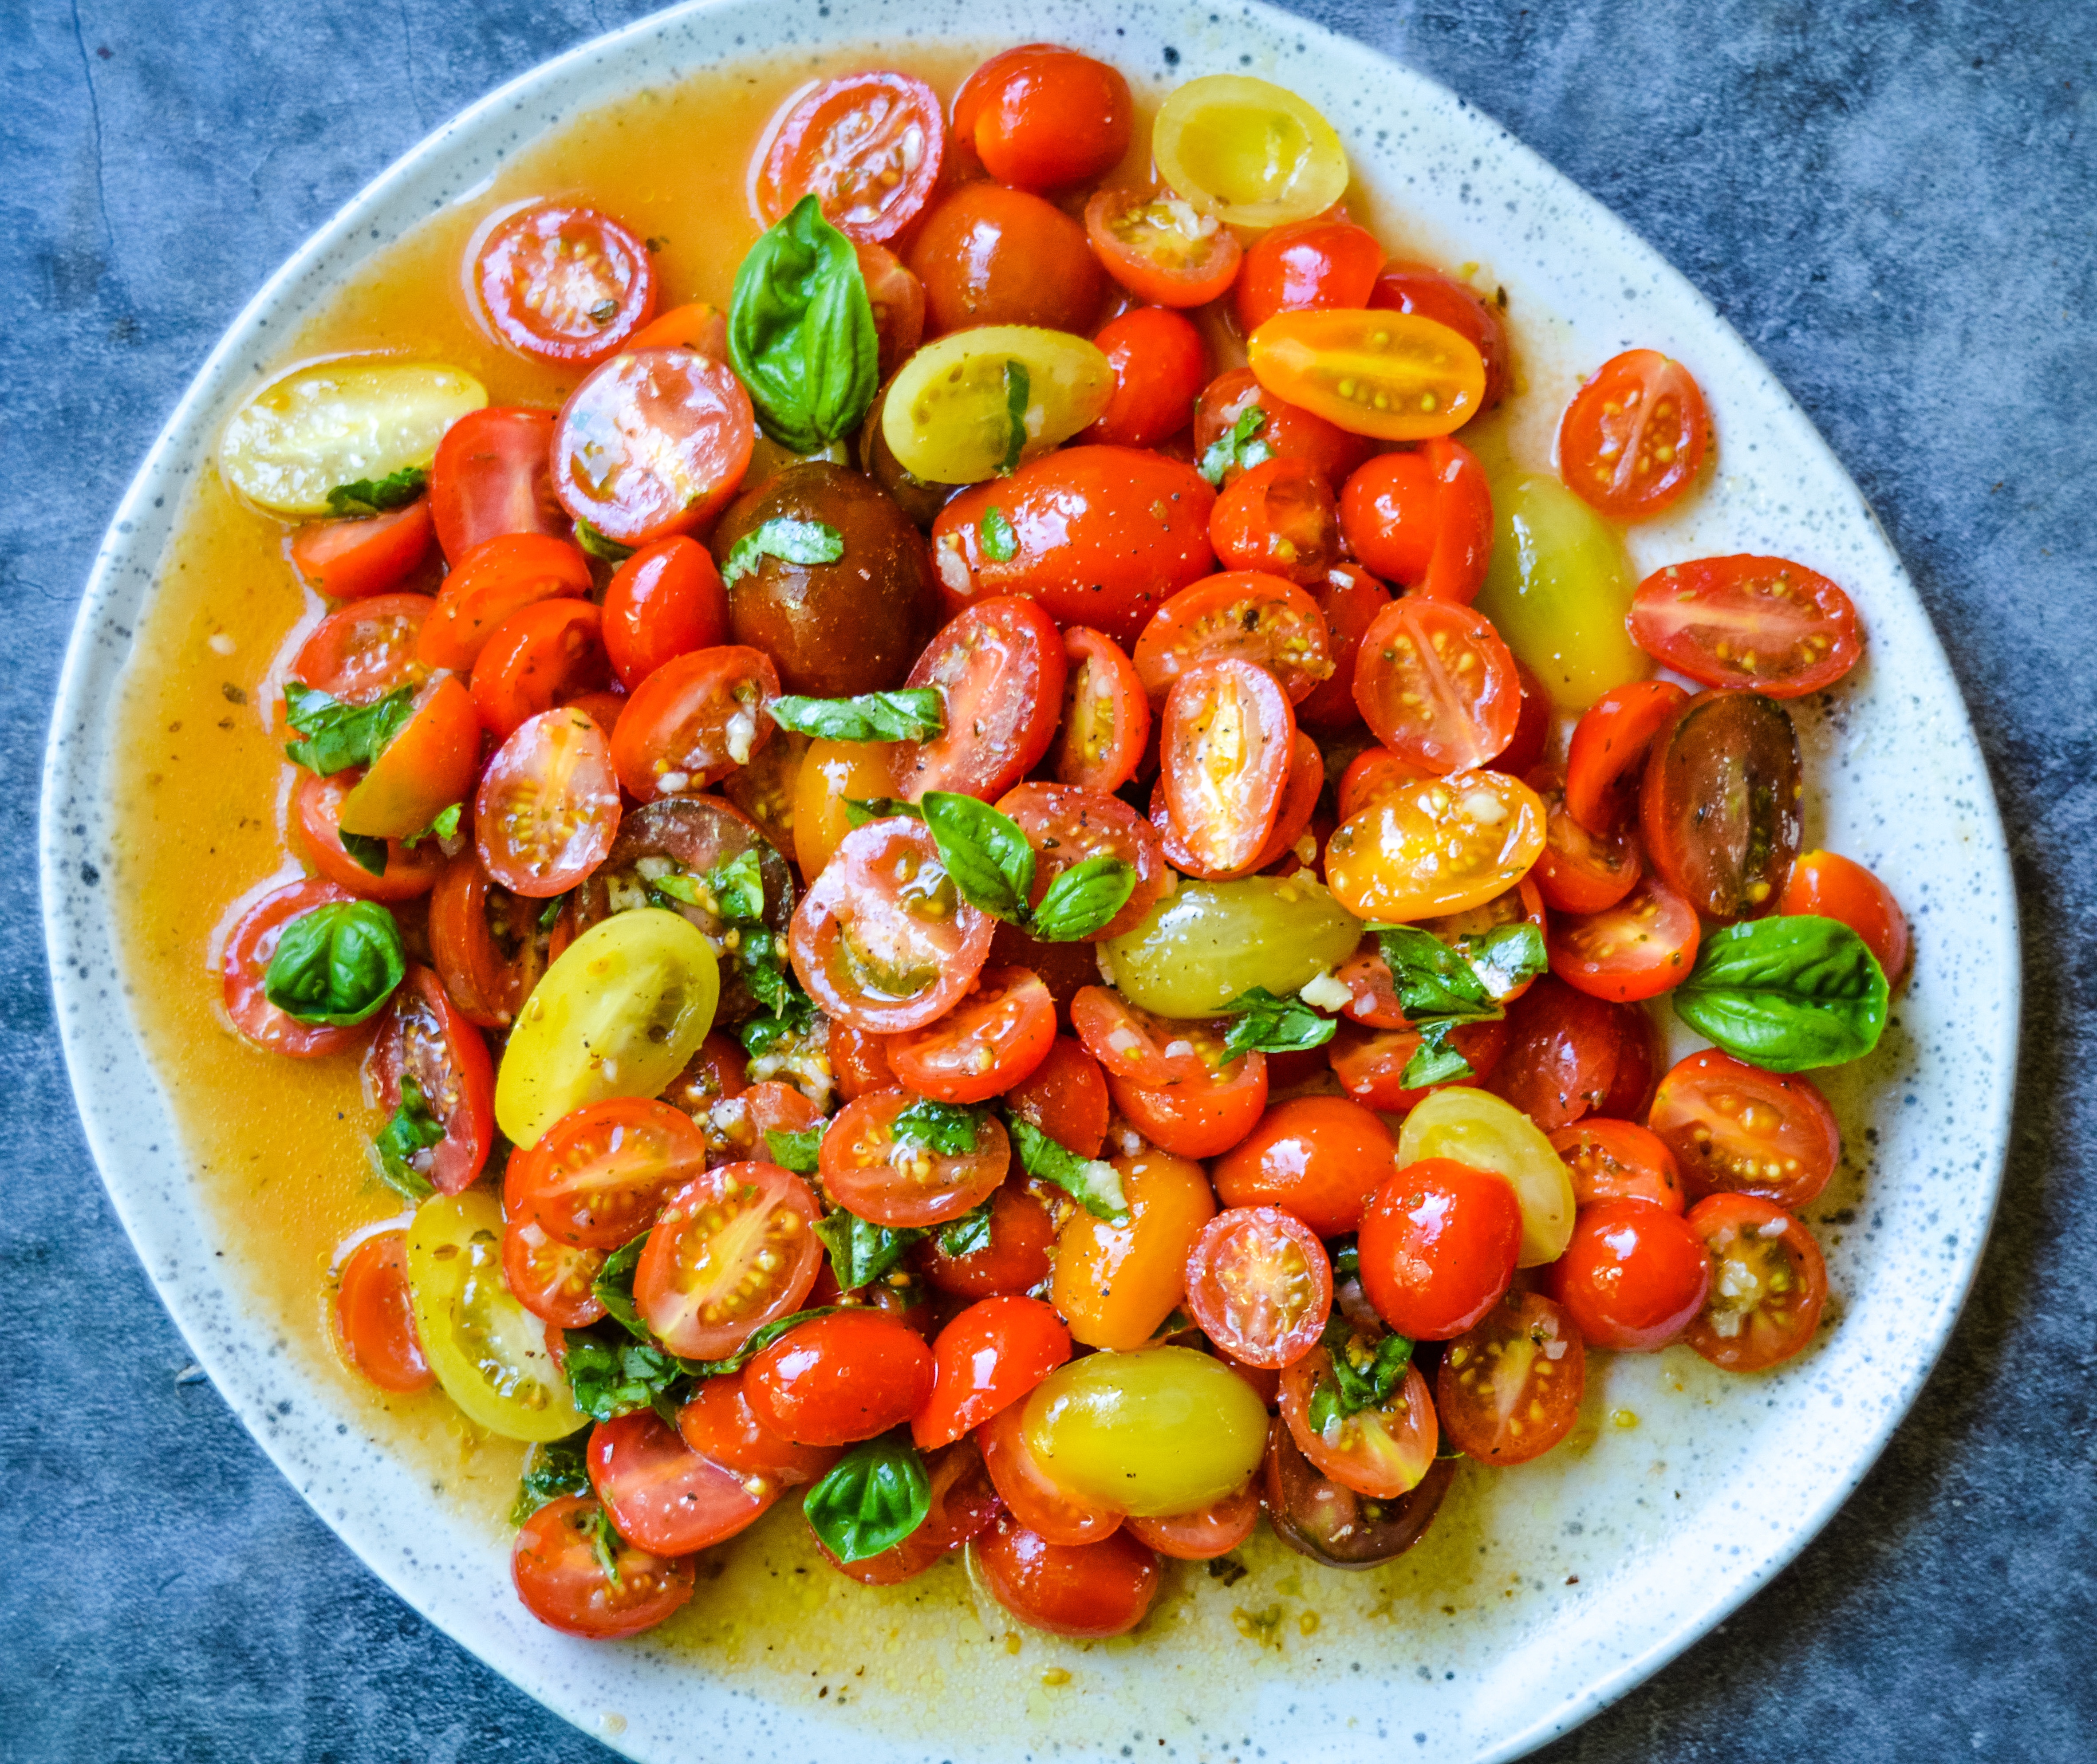 Marinated tomatoes